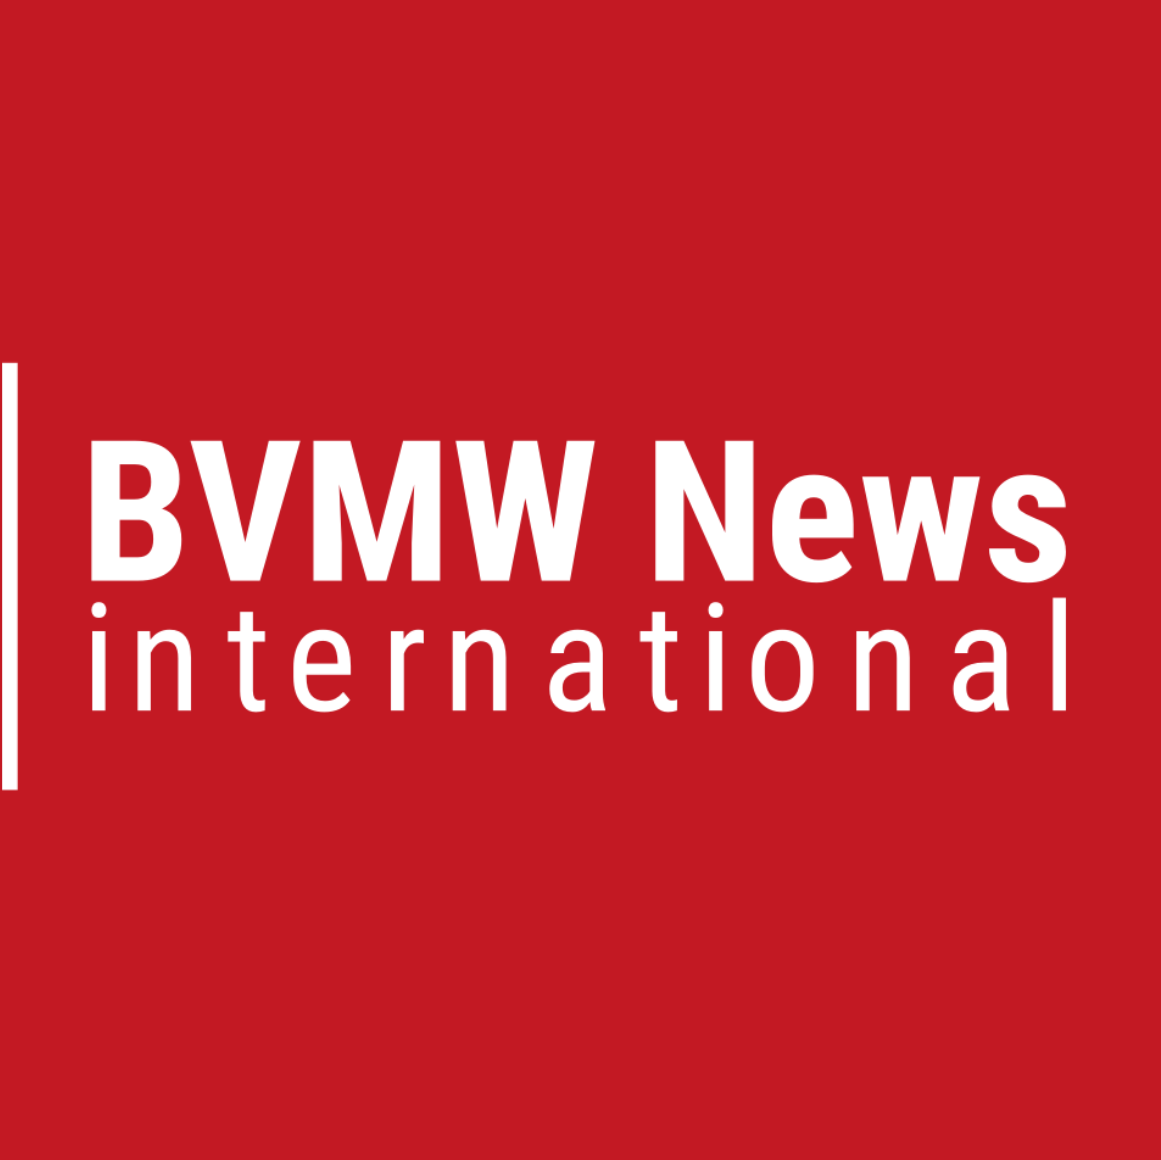 Bvmw news international